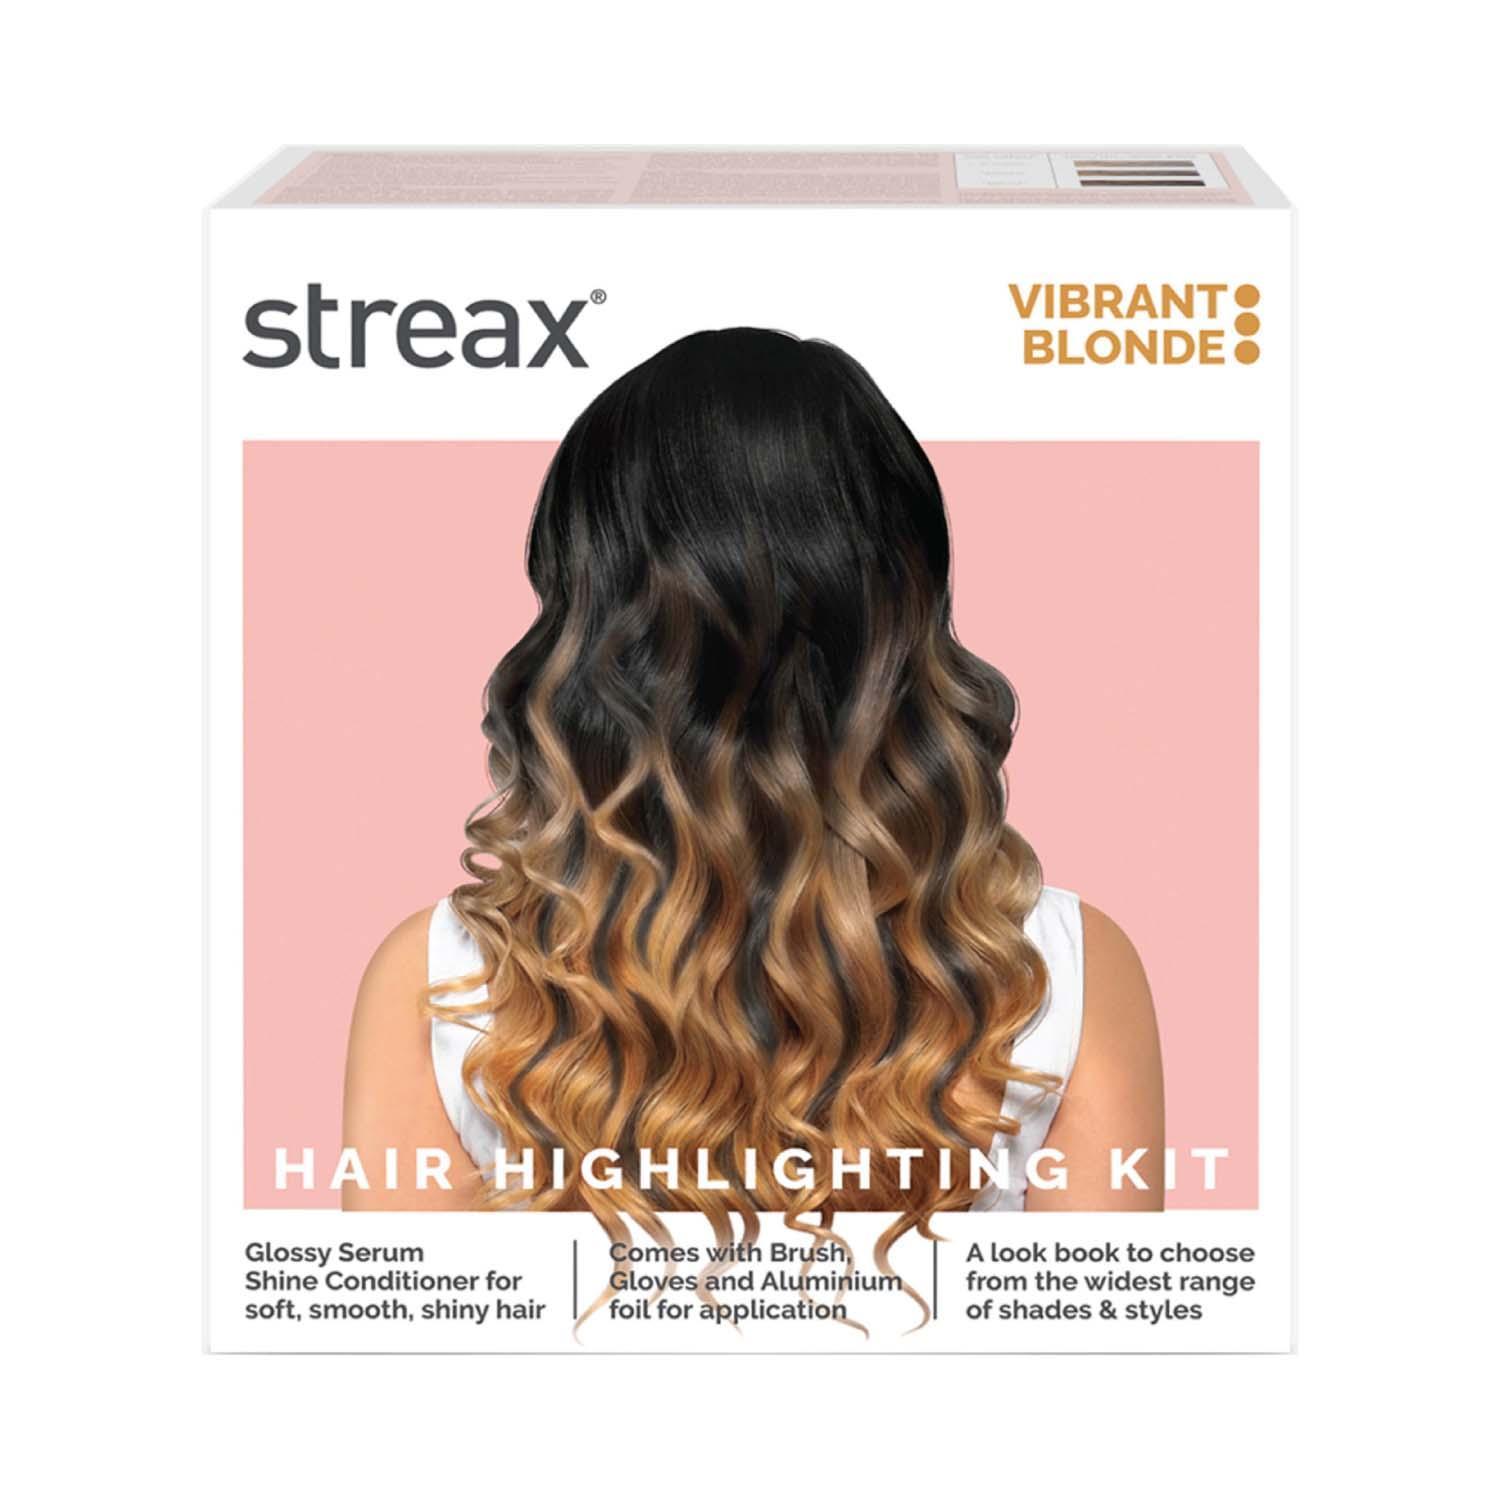 streax ultralights hair color highlight kit - vibrant blonde (180 g)